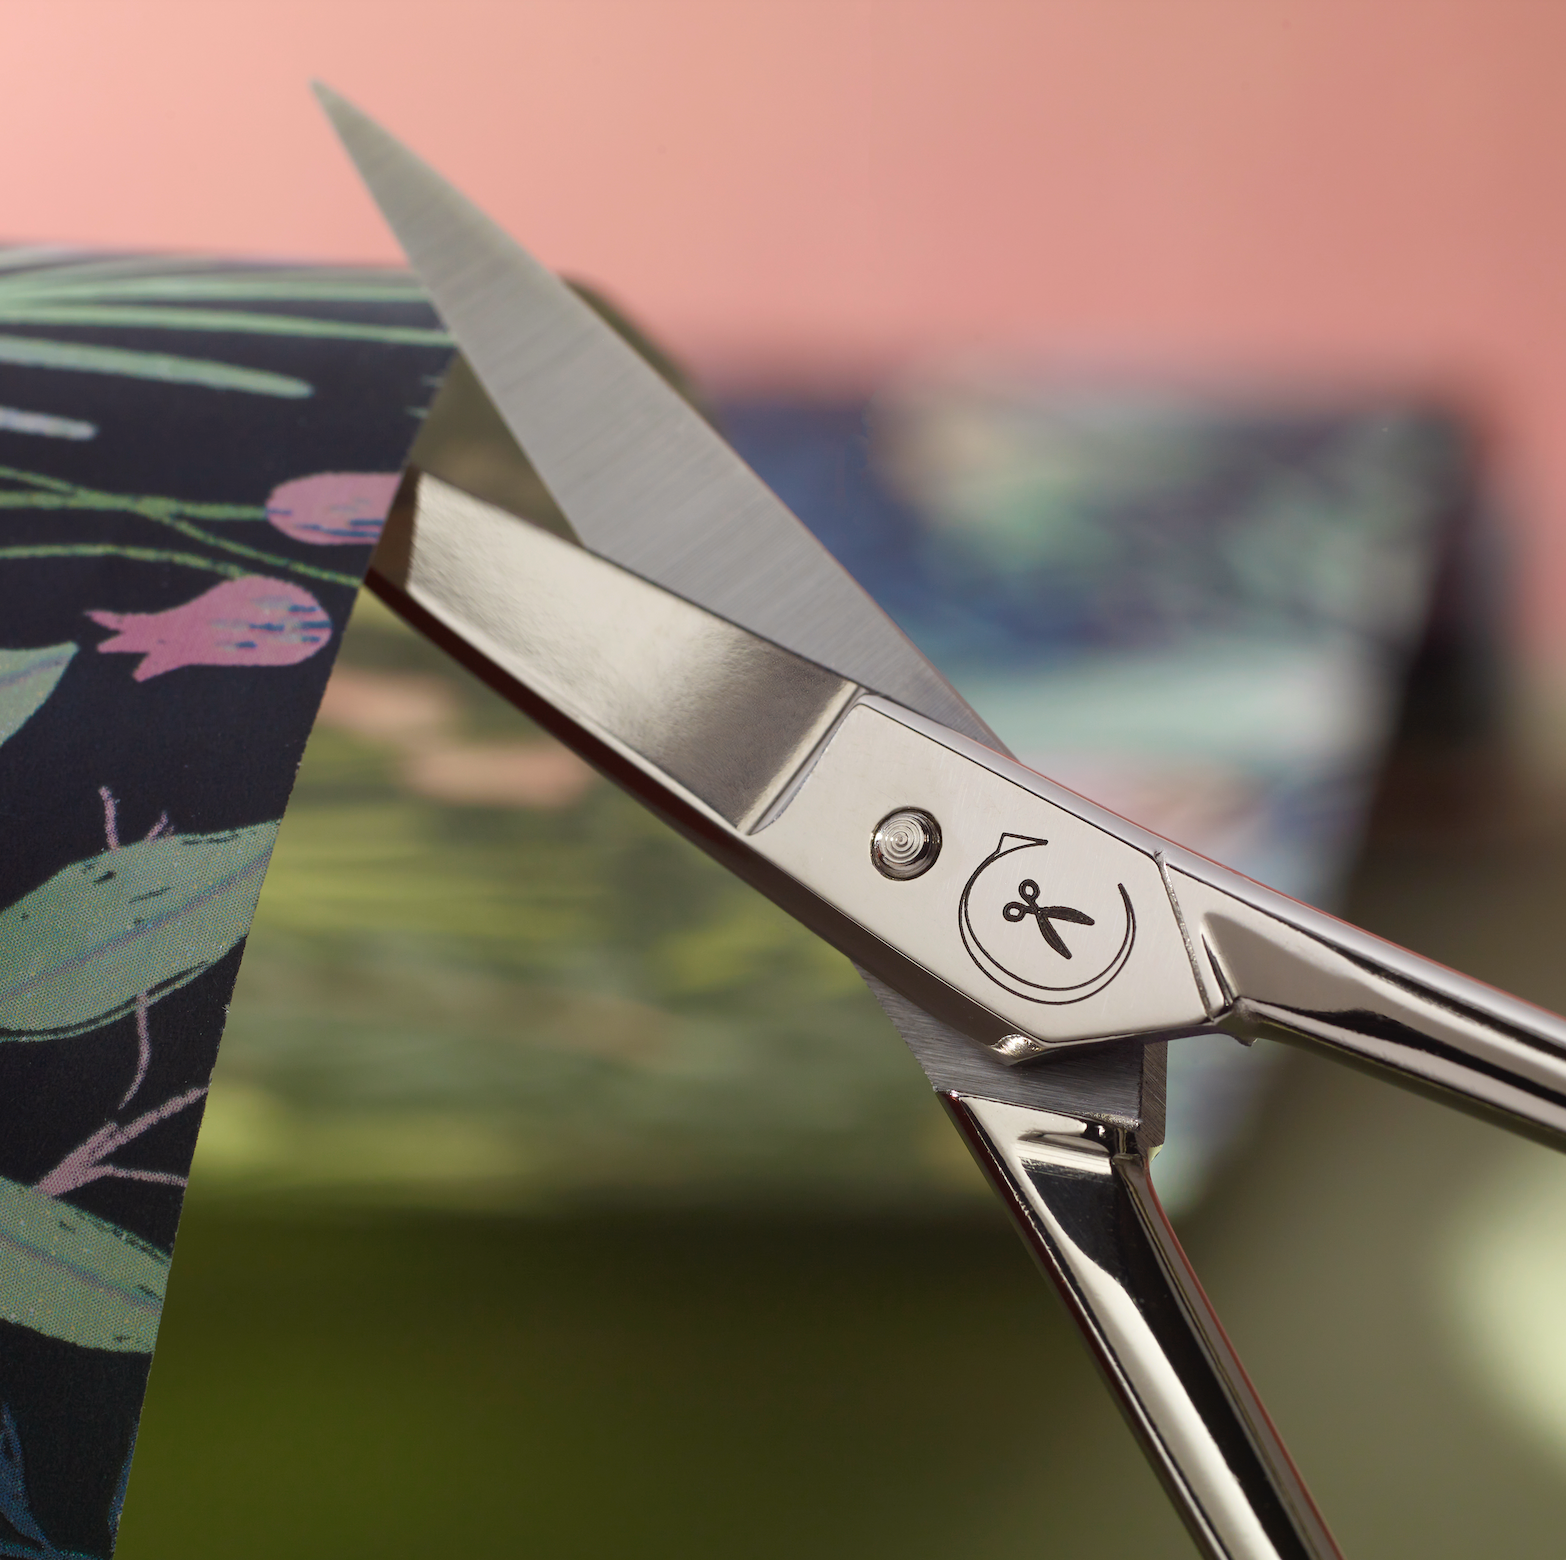 5-pc Sewing Pinking Shears Fabric Scissors Set - Arts & Crafts